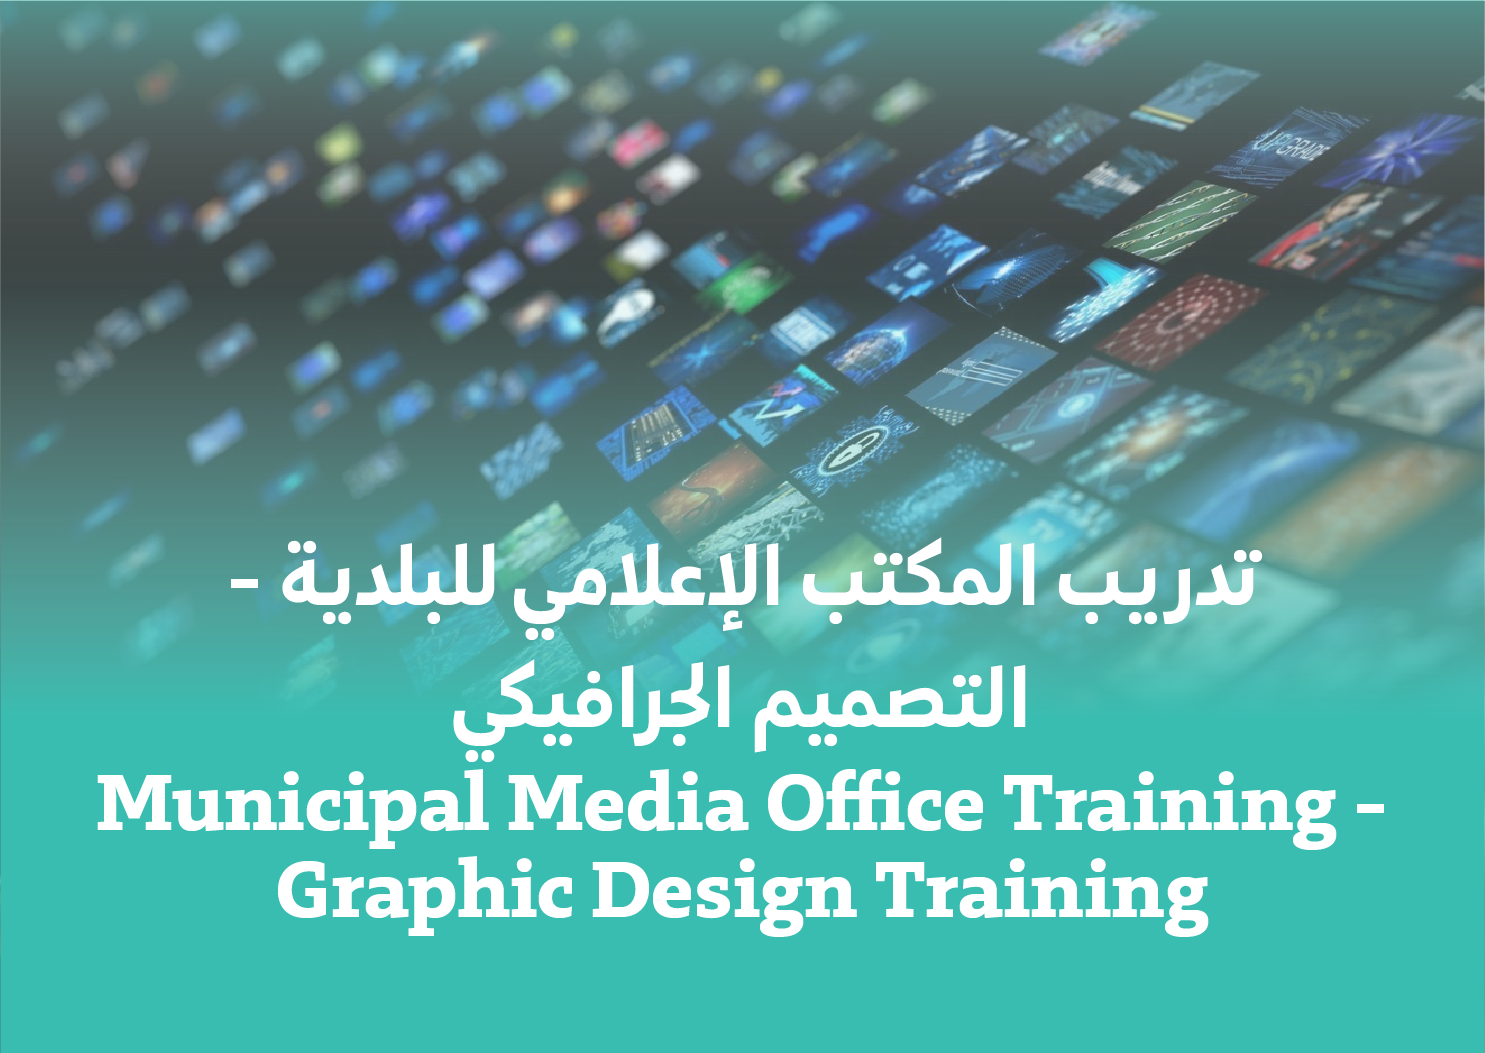 Municipal Media Office Training - Graphic Design Training